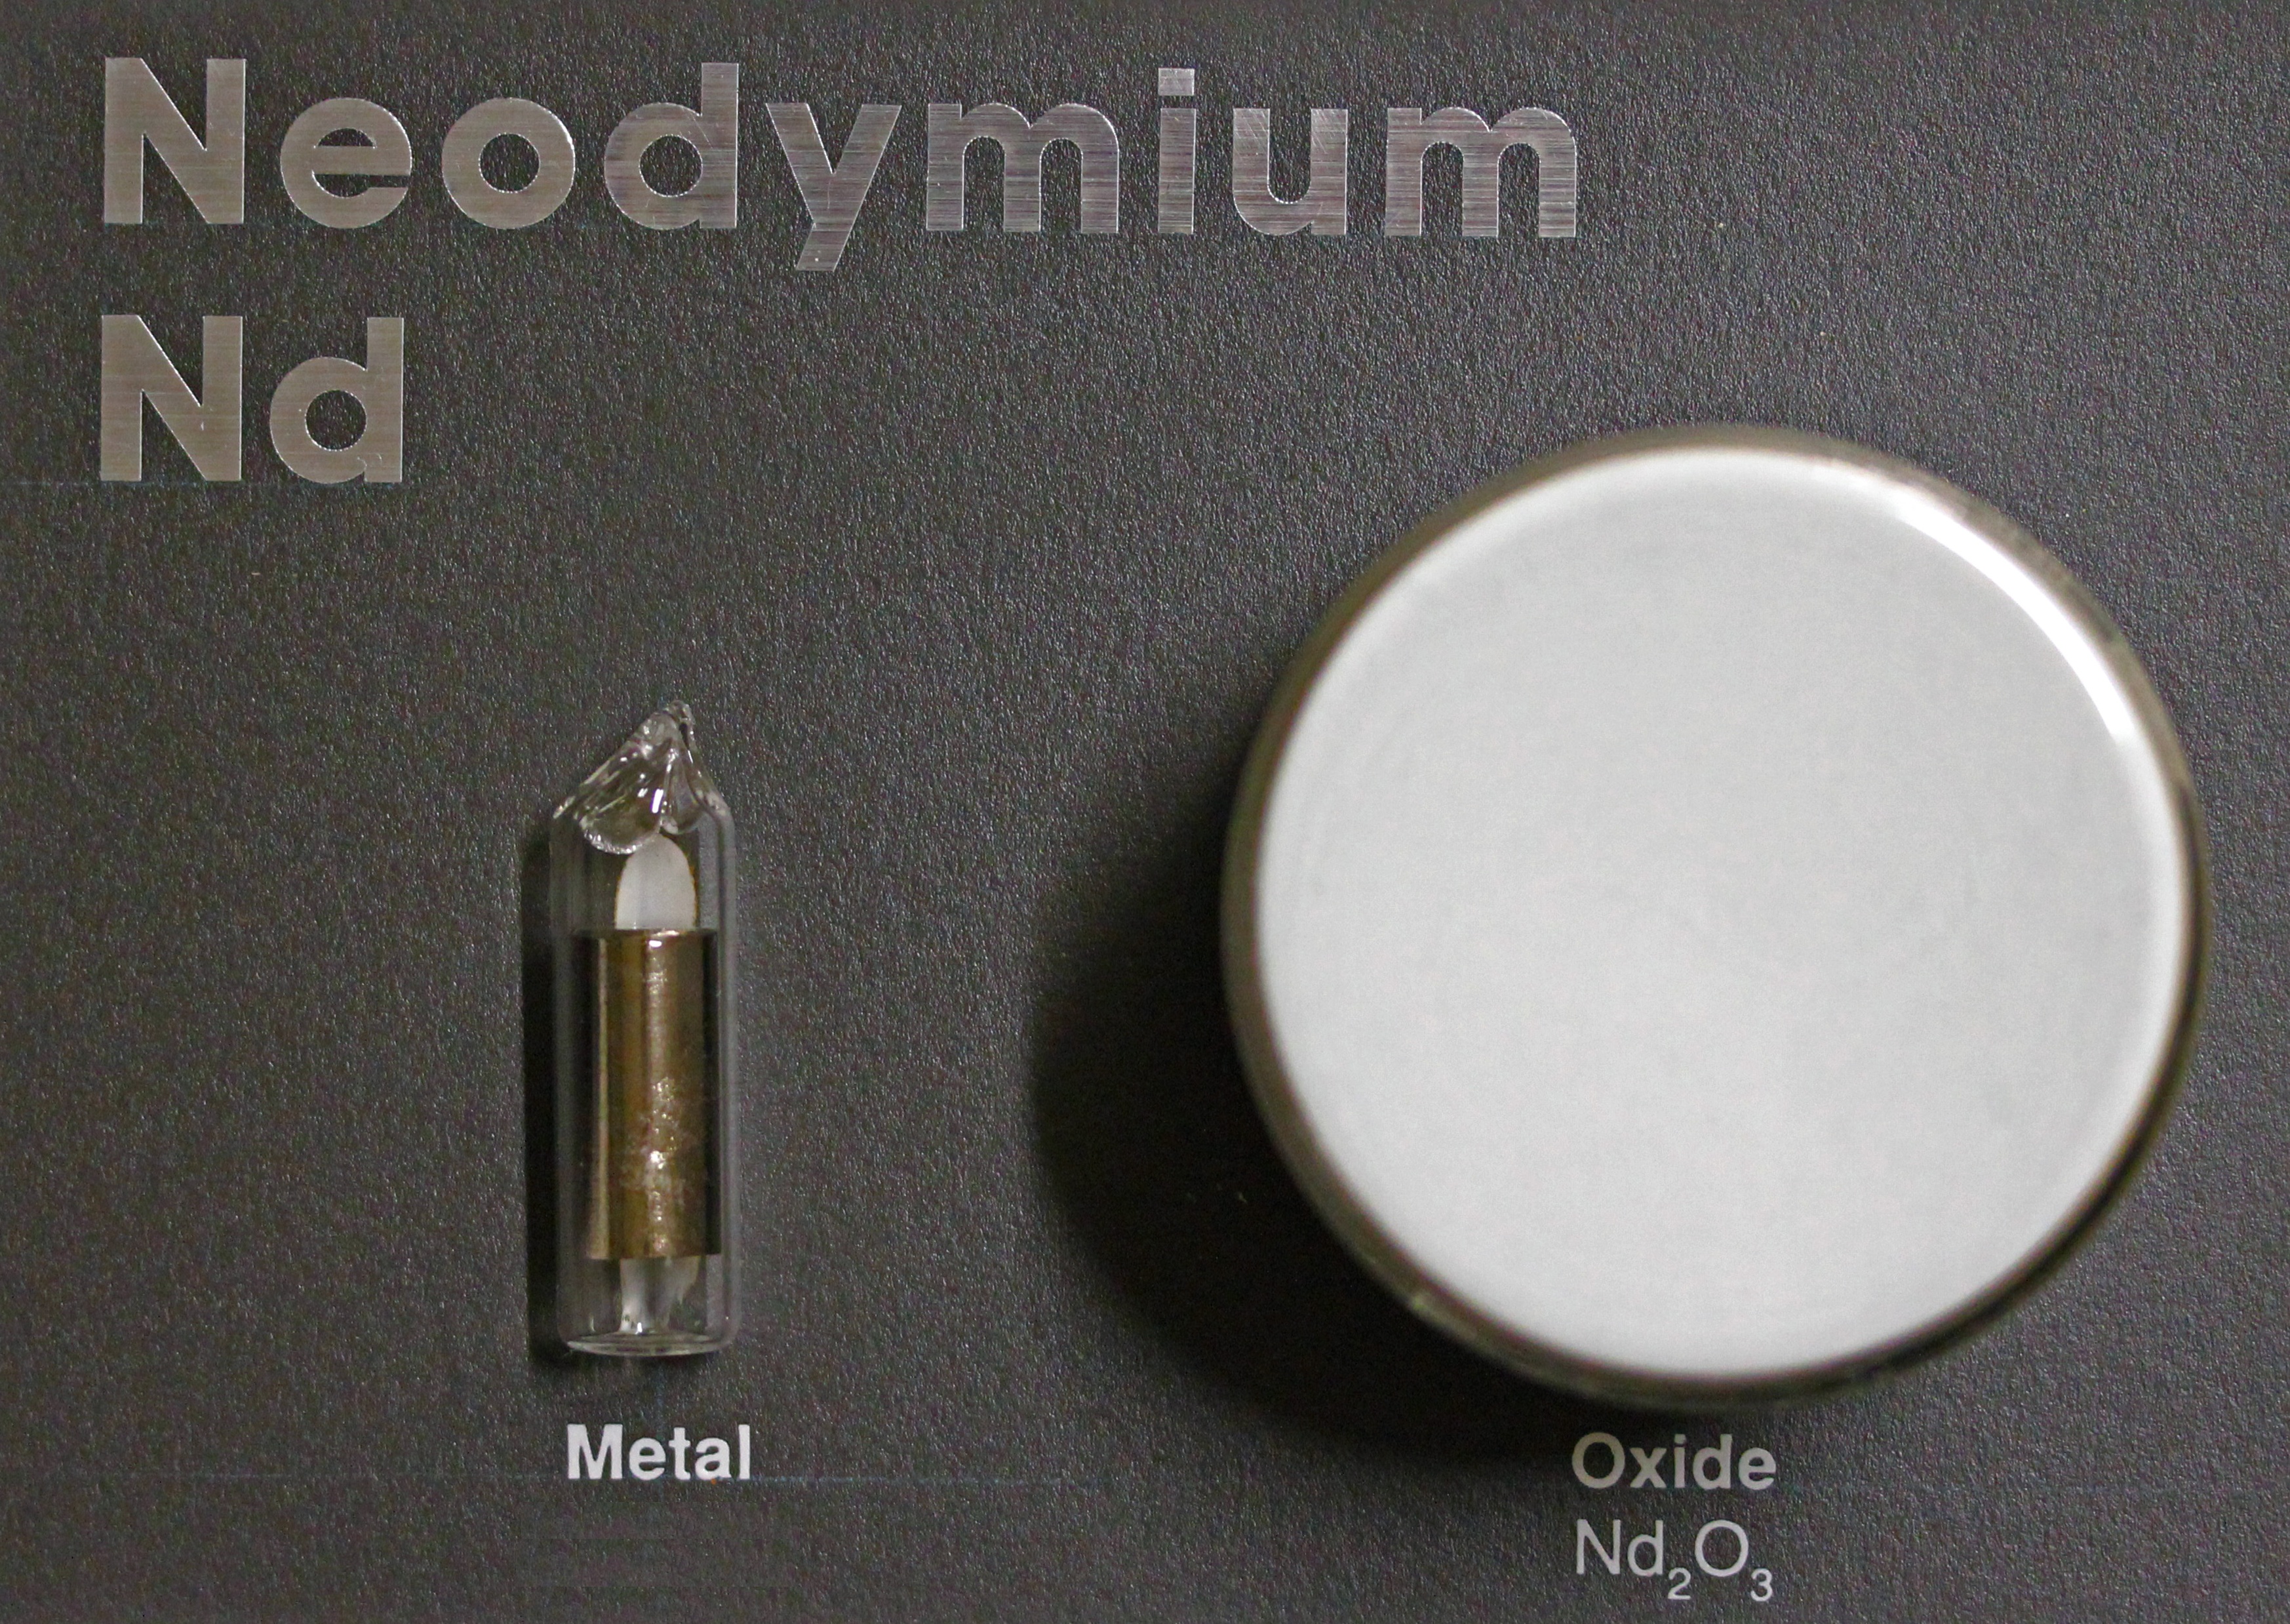 Neodymium metal and oxide